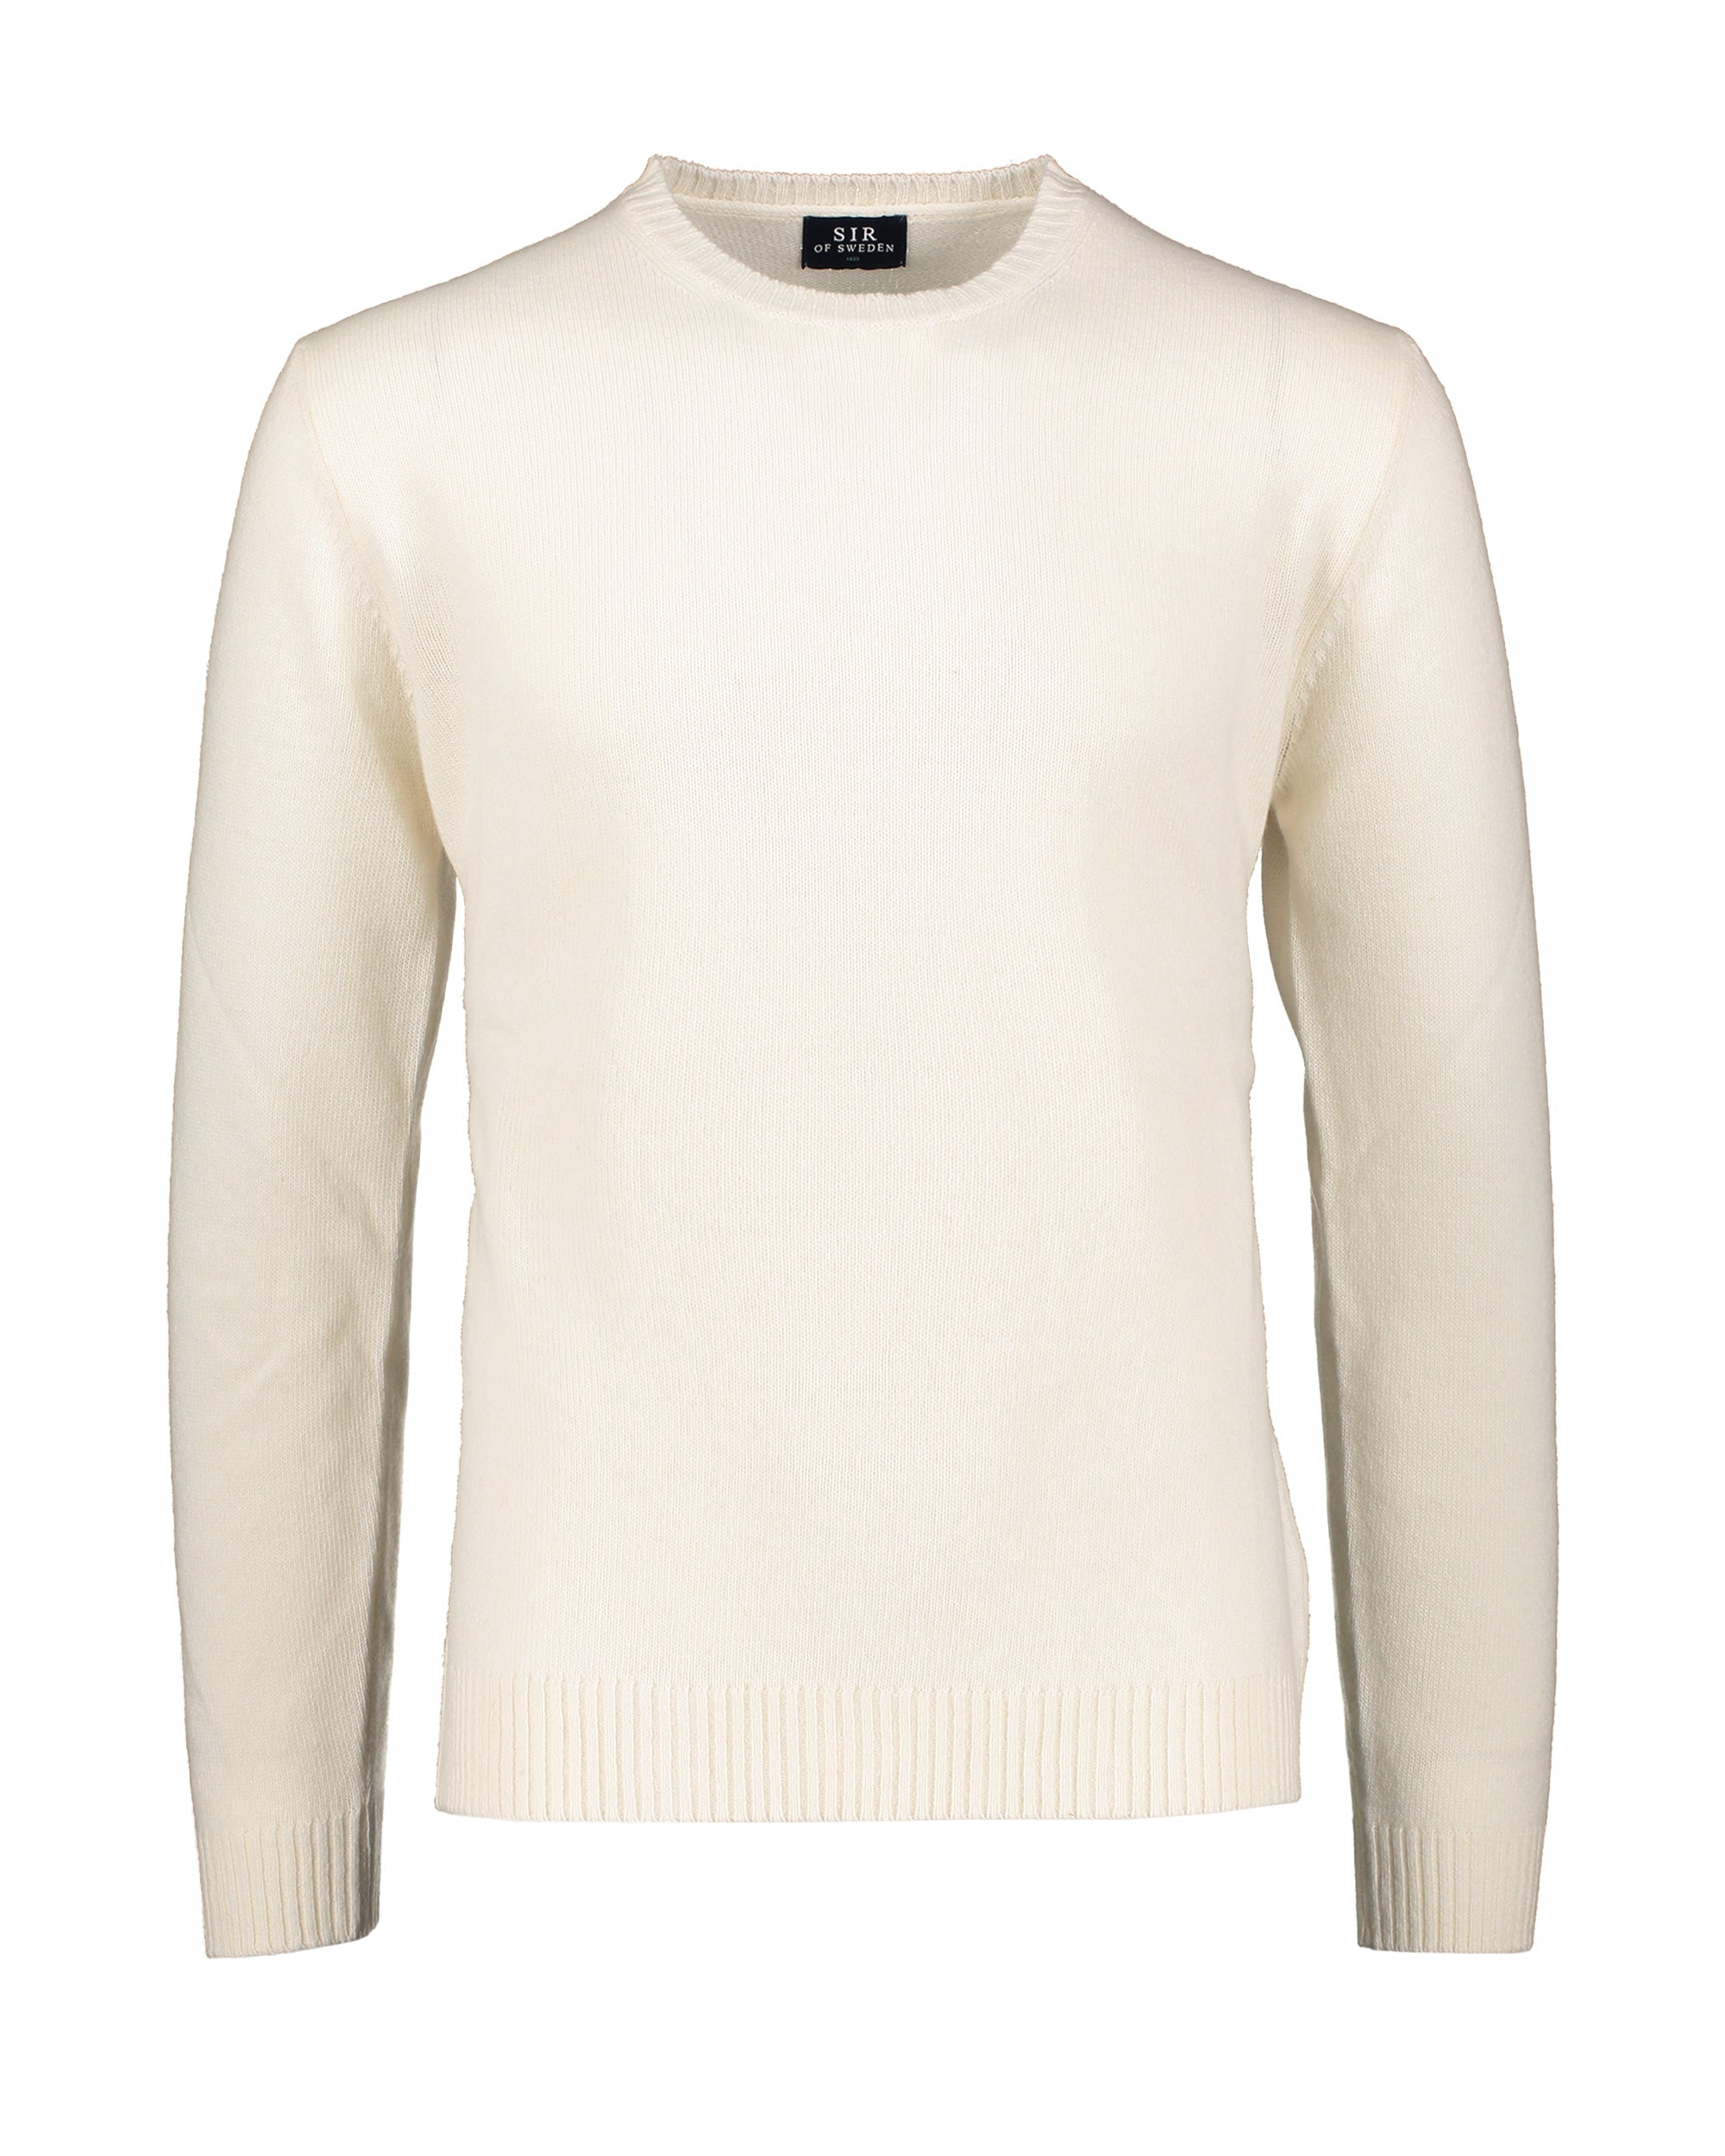 Harald White Crewneck Sweater